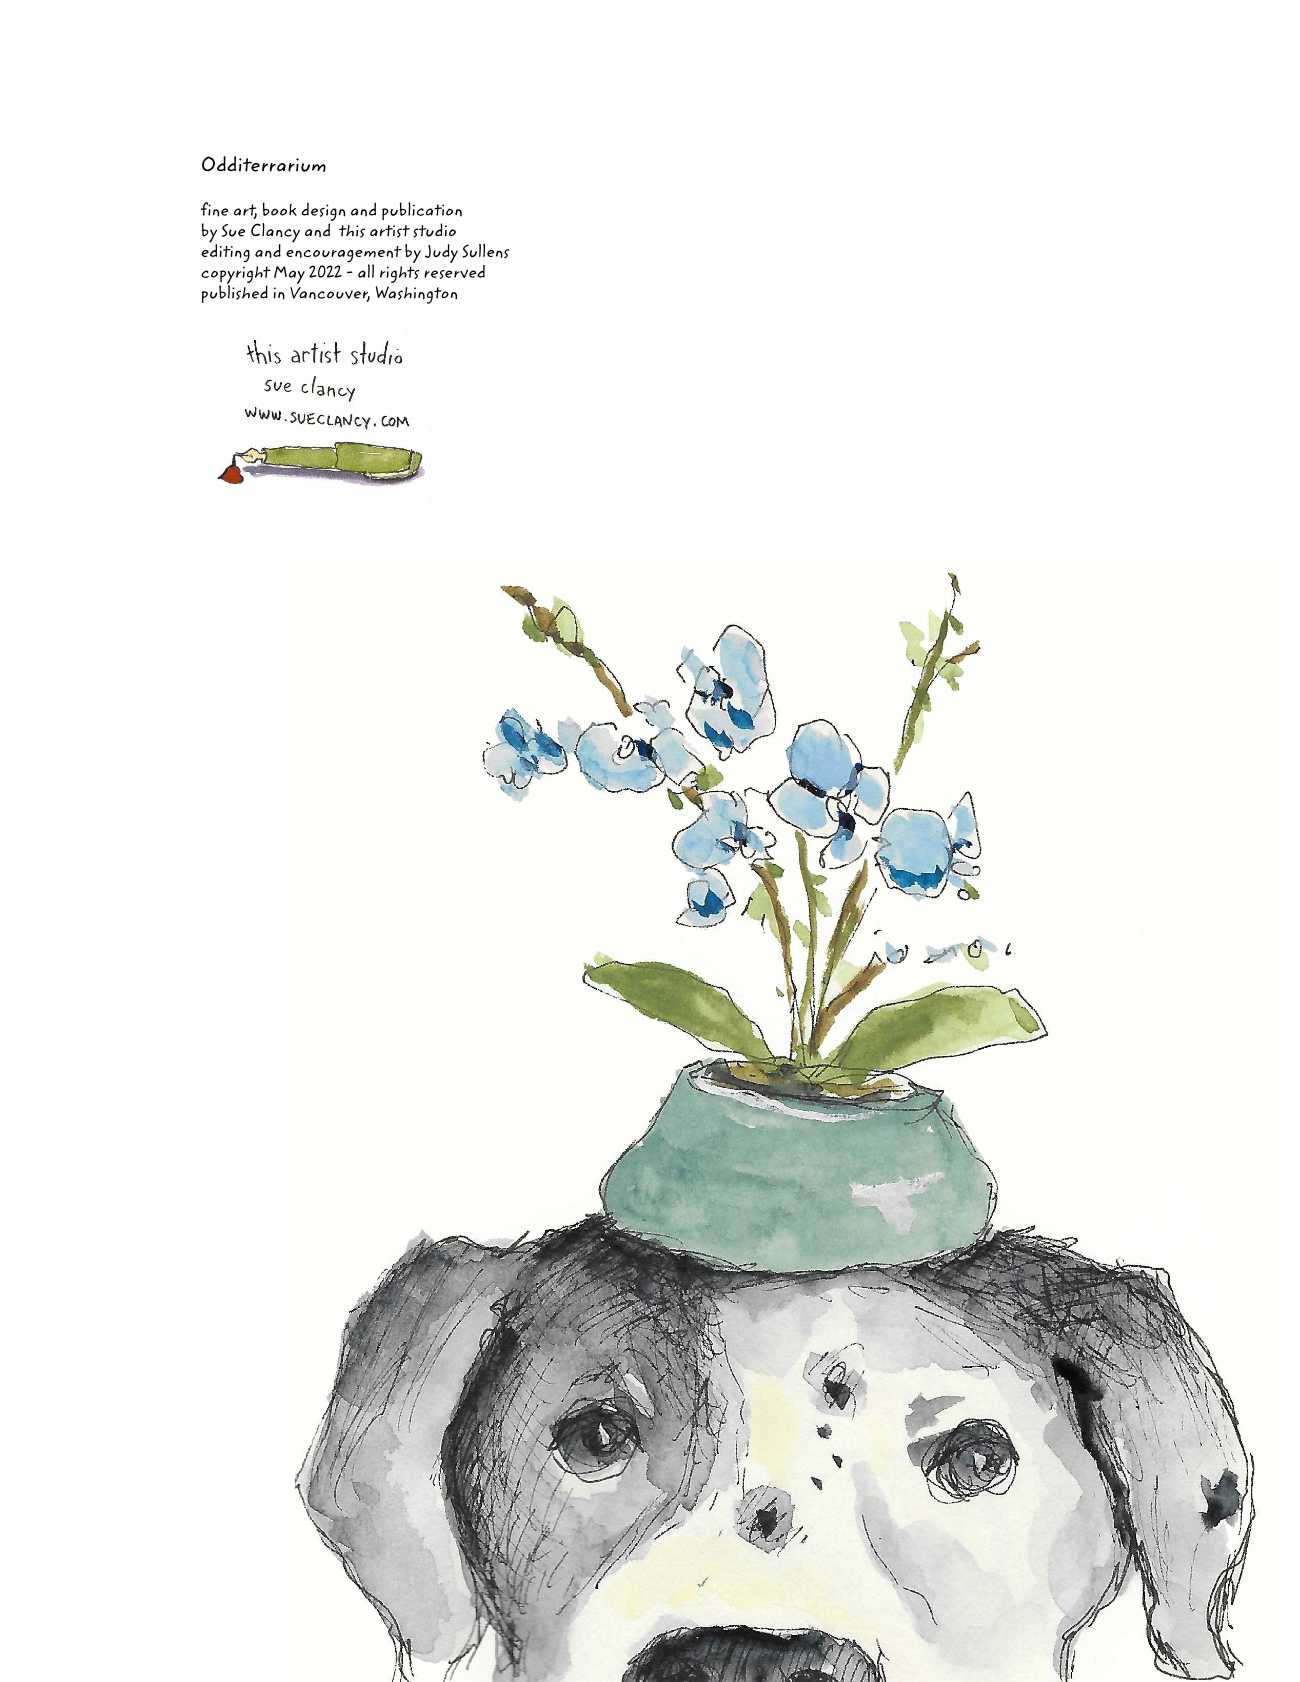 Short stories for kids Odditerrarium by Sue Clancy art books for kids page 23